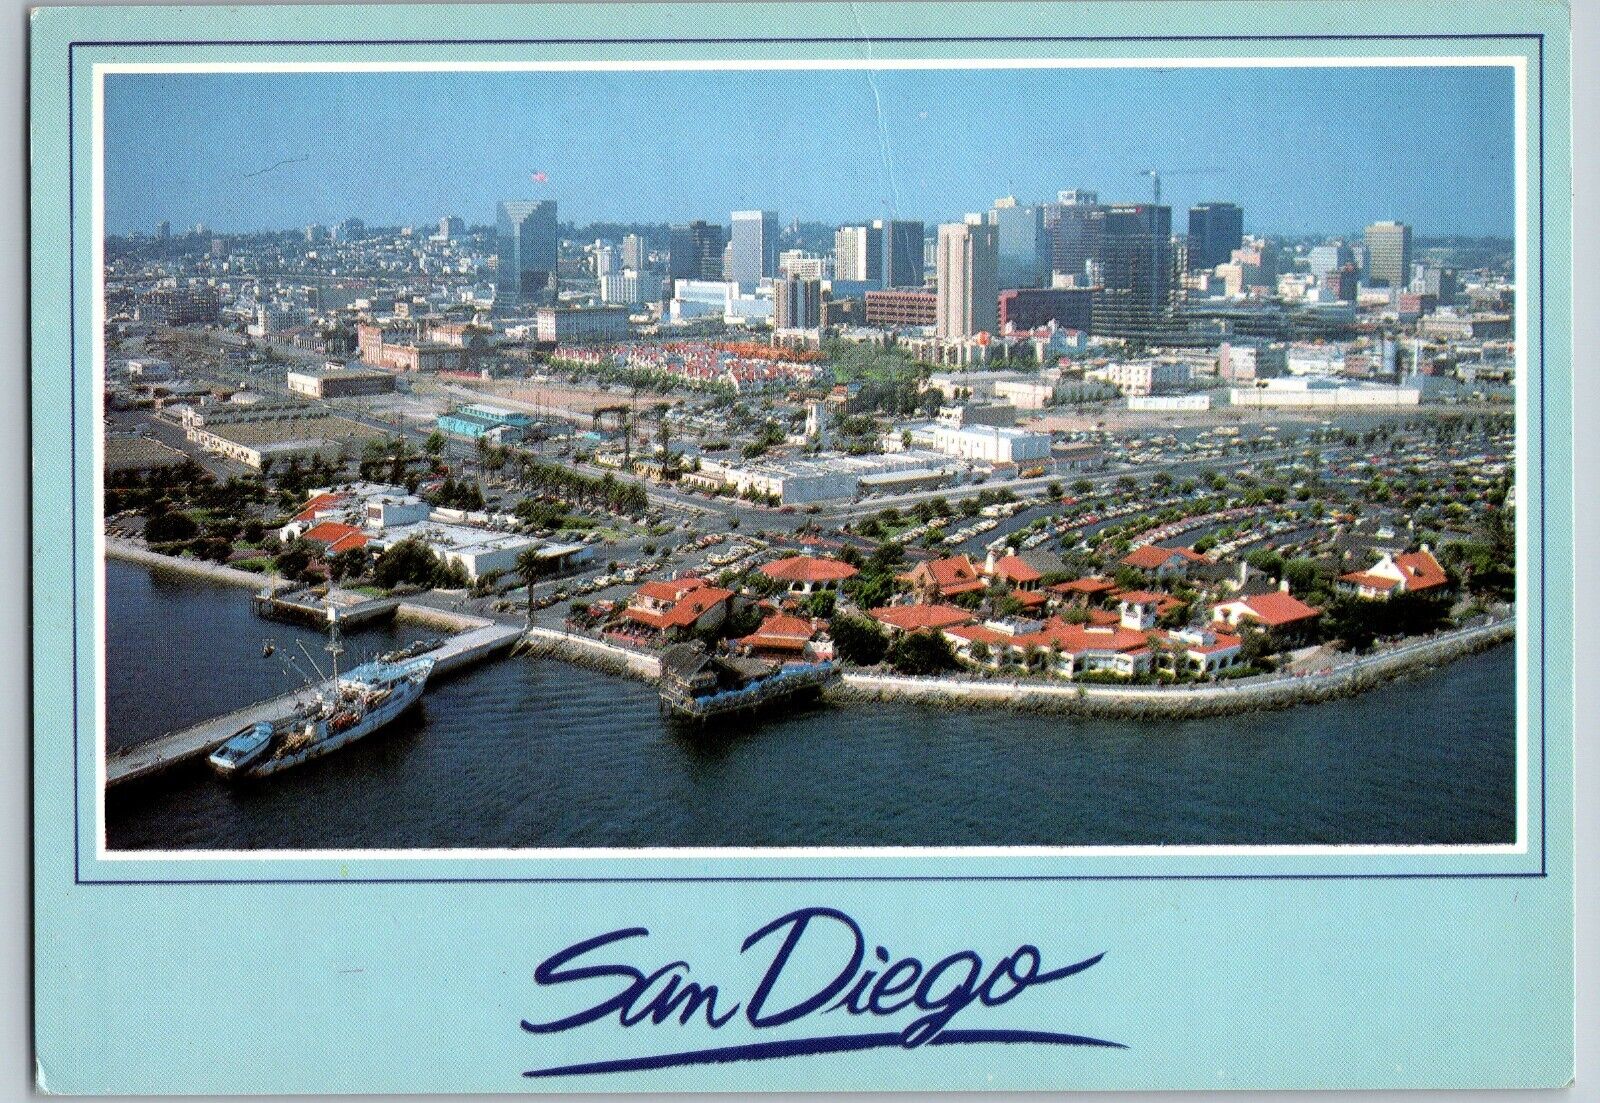 San Diego, California - Aerial View shows Waterfront - Vintage Postcard 4x6